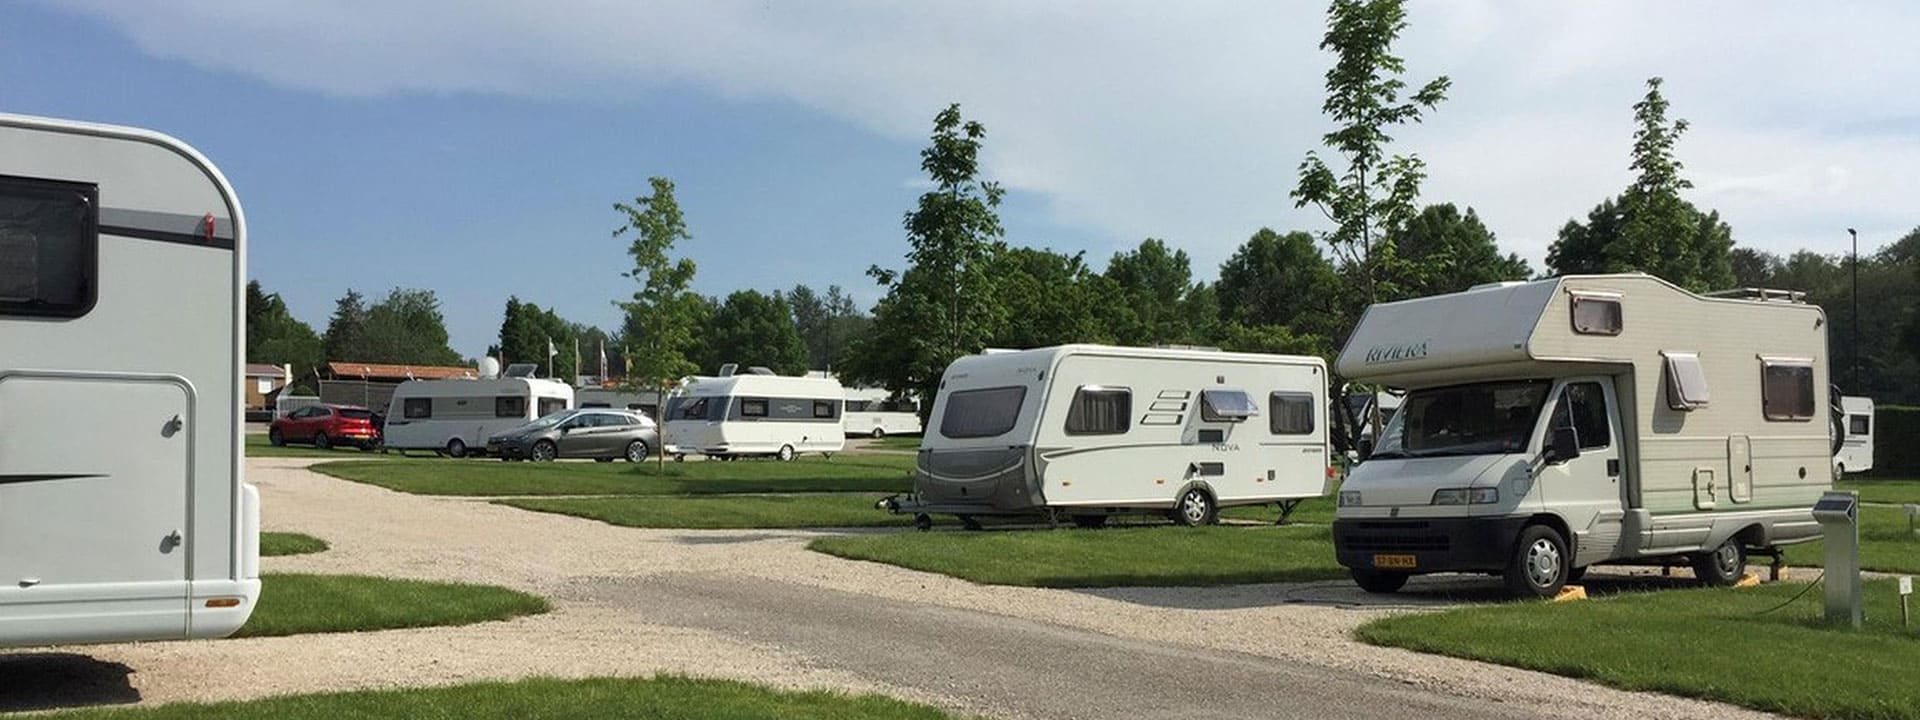 Campsite Porte des Vosges, camping East Region : location A31